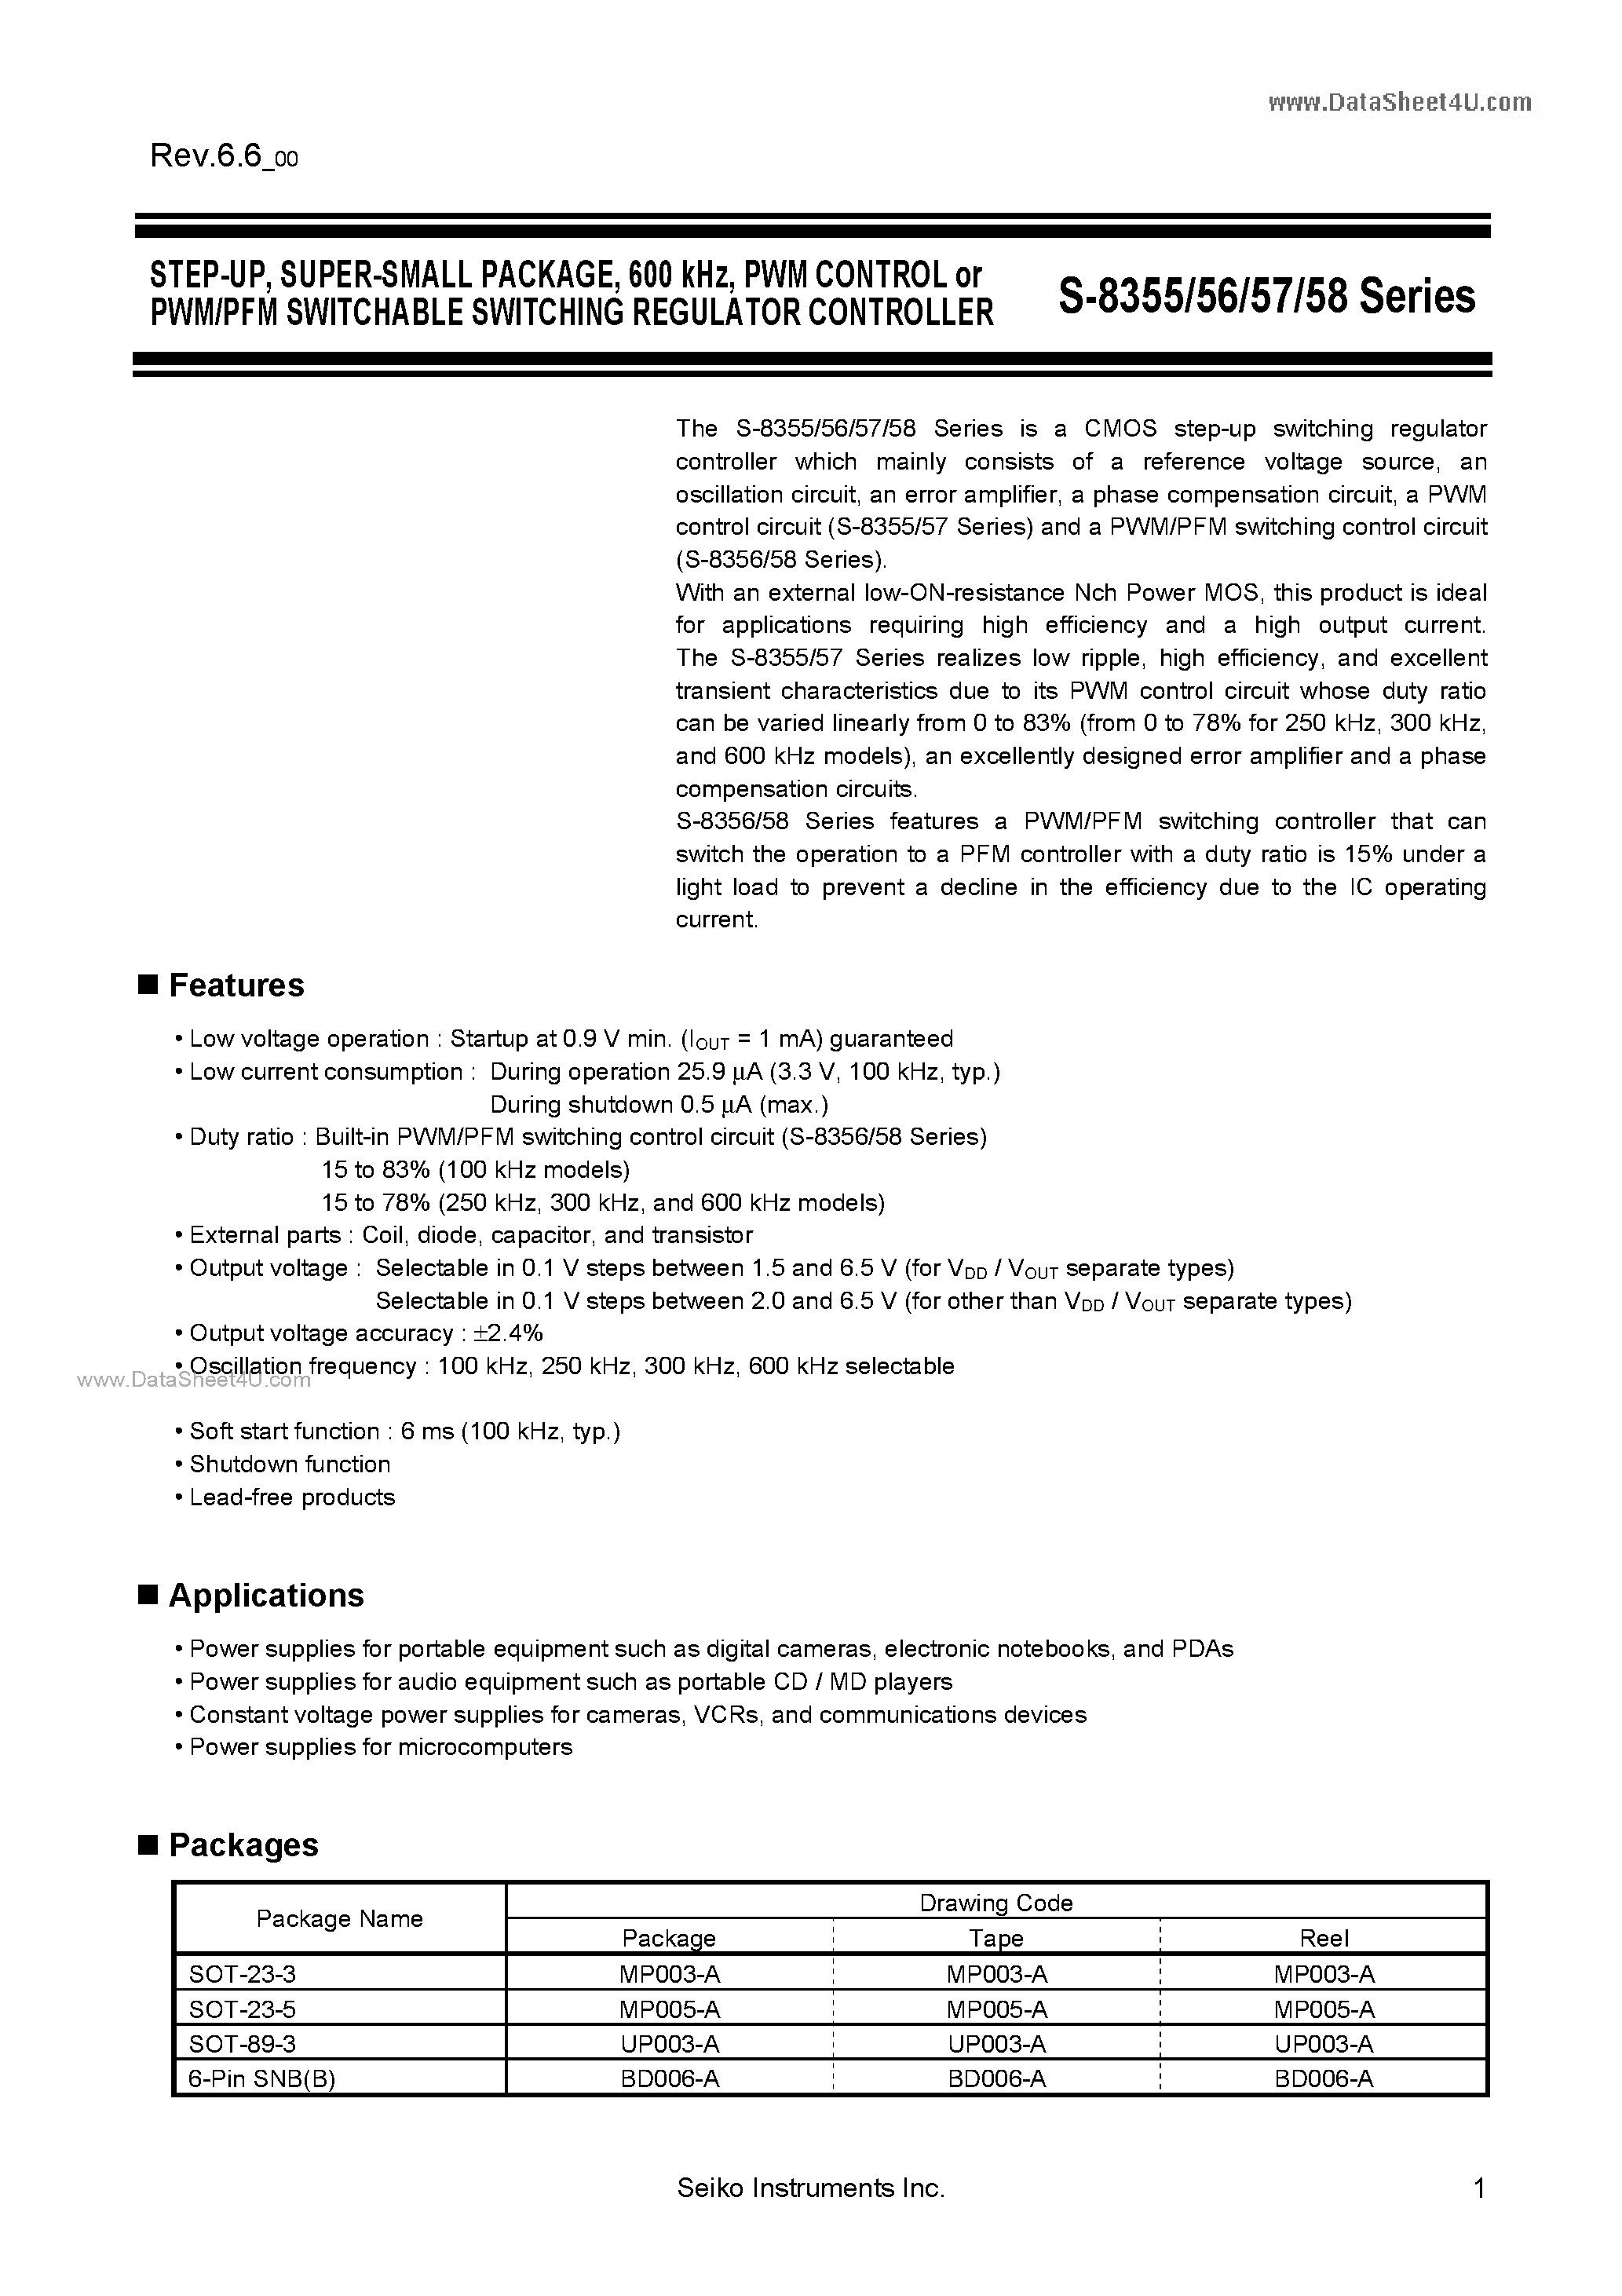 Datasheet S-8355 - (S-8355 - S-8358) PWM/PFM SWITCHING CONTROL STEP-UP SWITCHING REGULATOR page 1